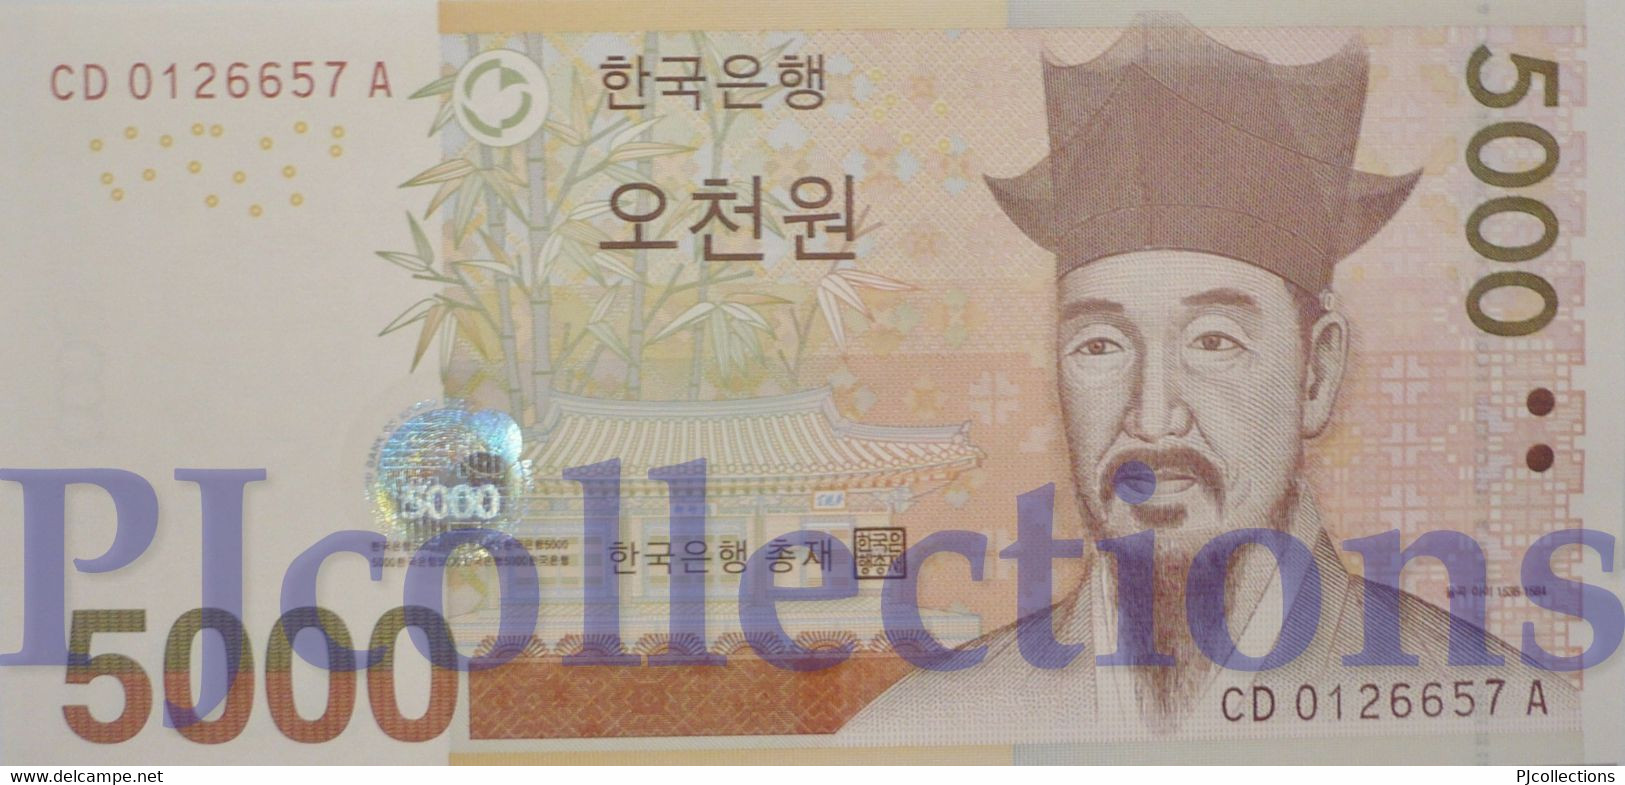 SOUTH KOREA 5000 WON 2006 PICK 55 UNC - Korea, South